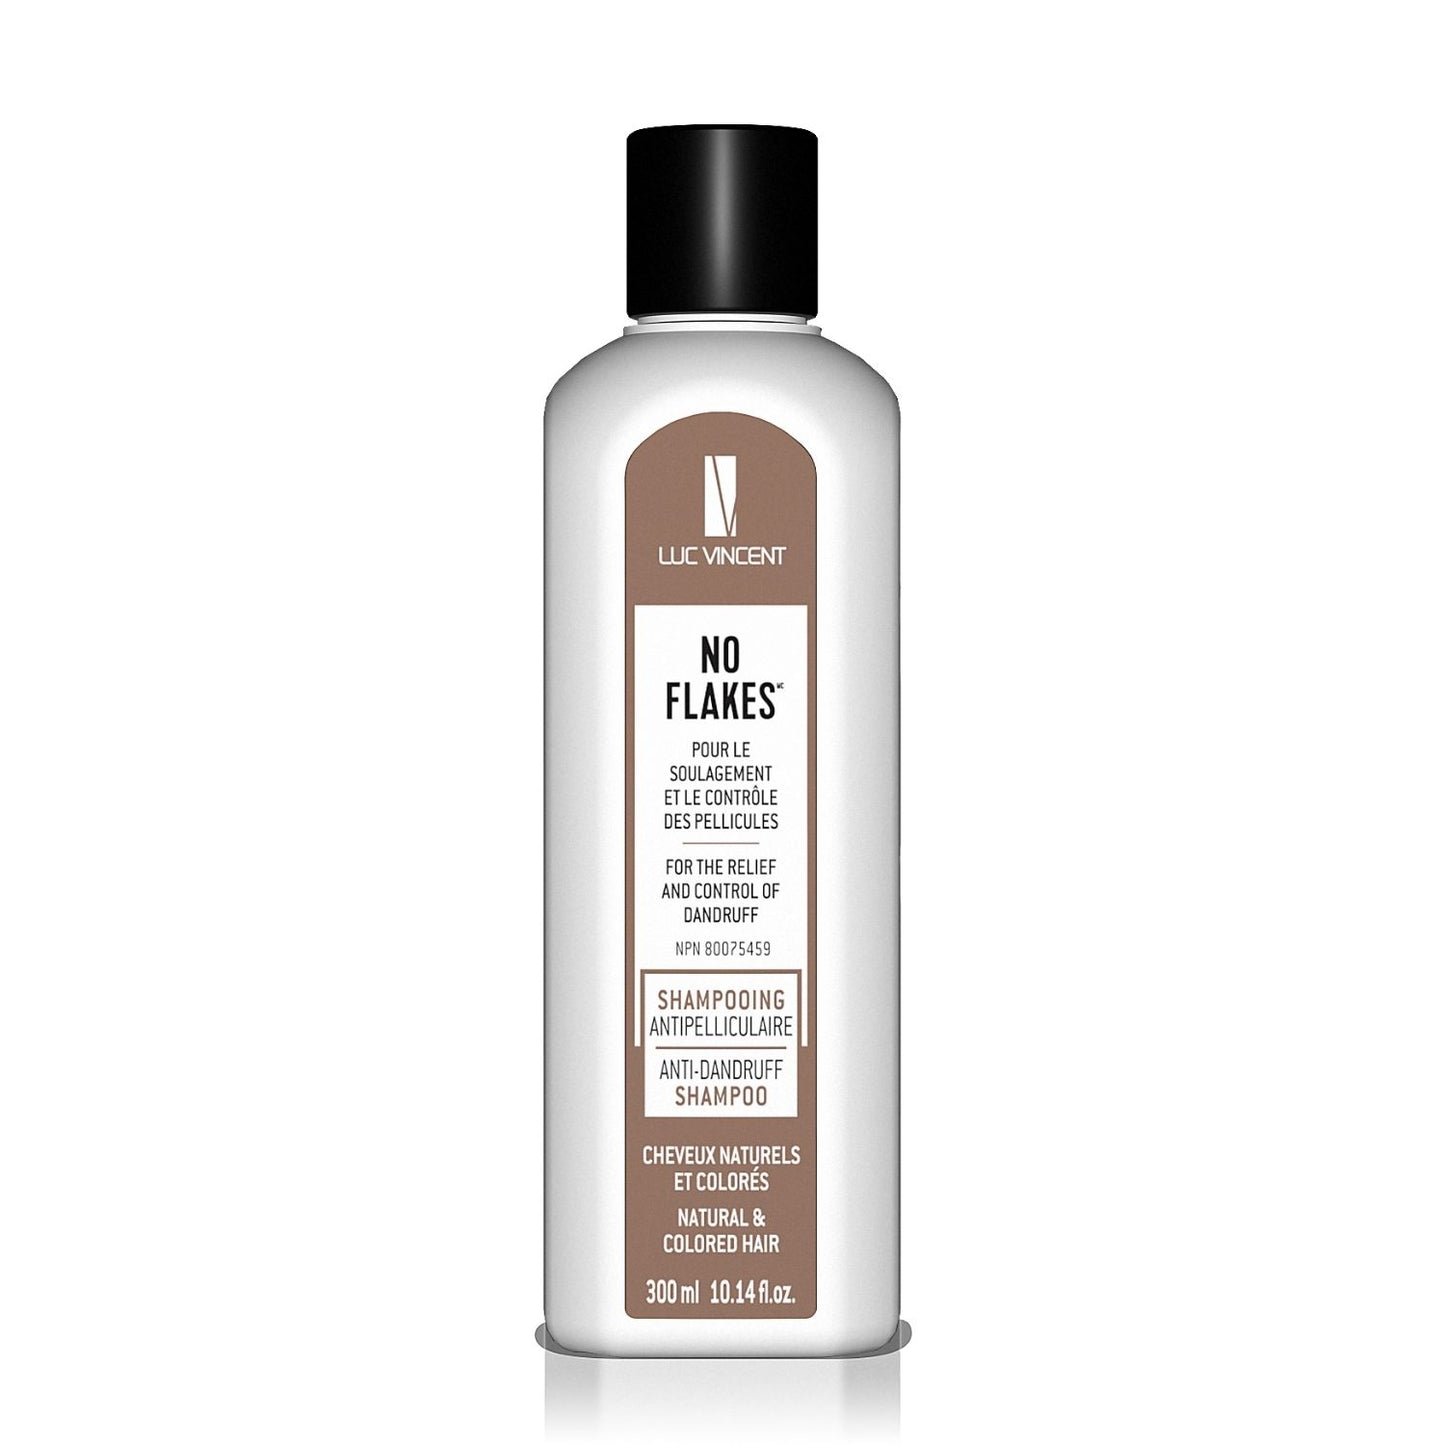 NO FLAKES - Revolutionary anti-dandruff shampoo